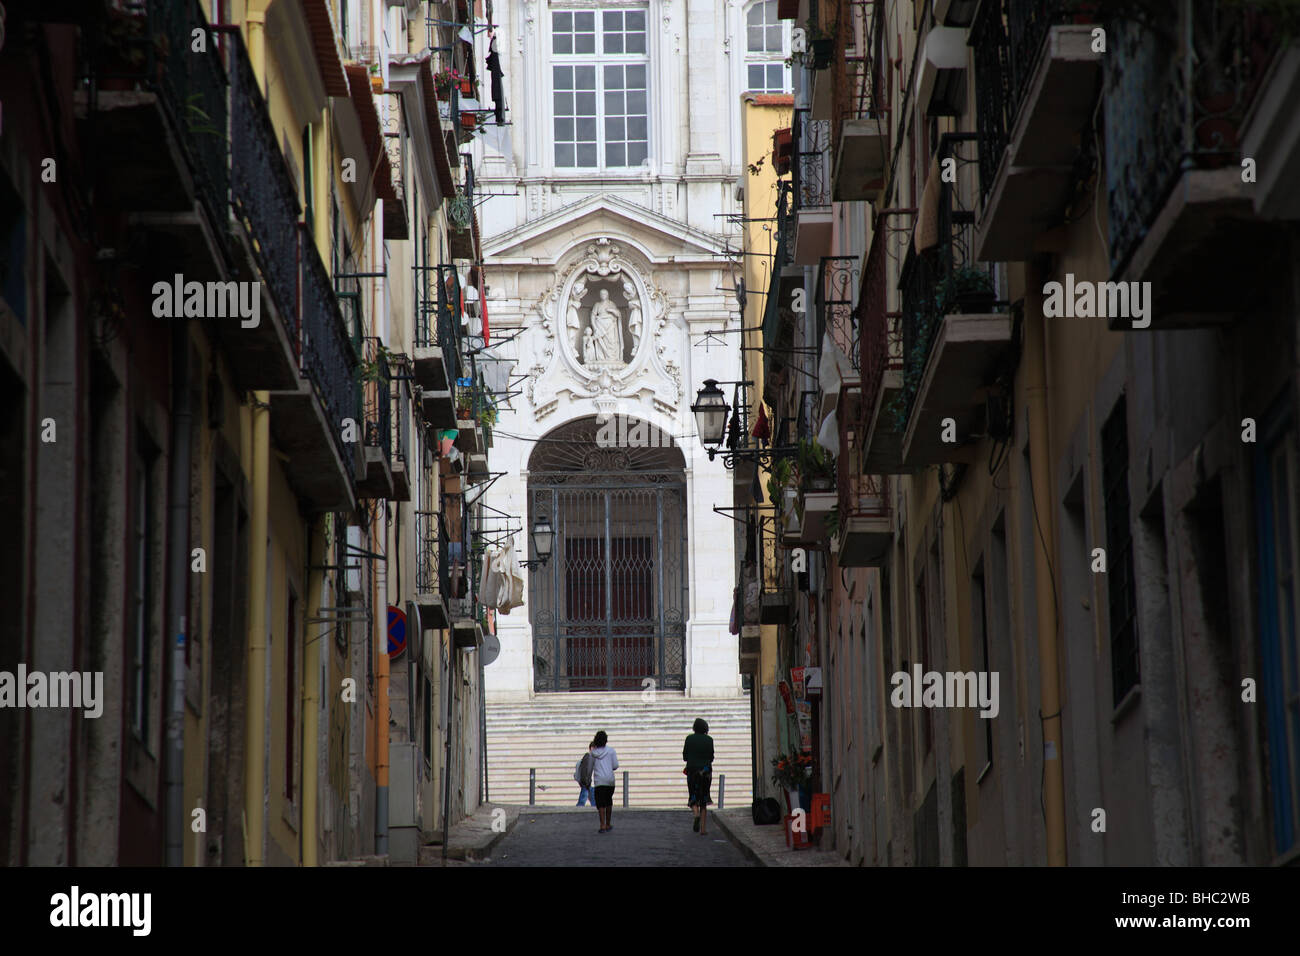 The Bairro alto quarter in Lisbon Stock Photo